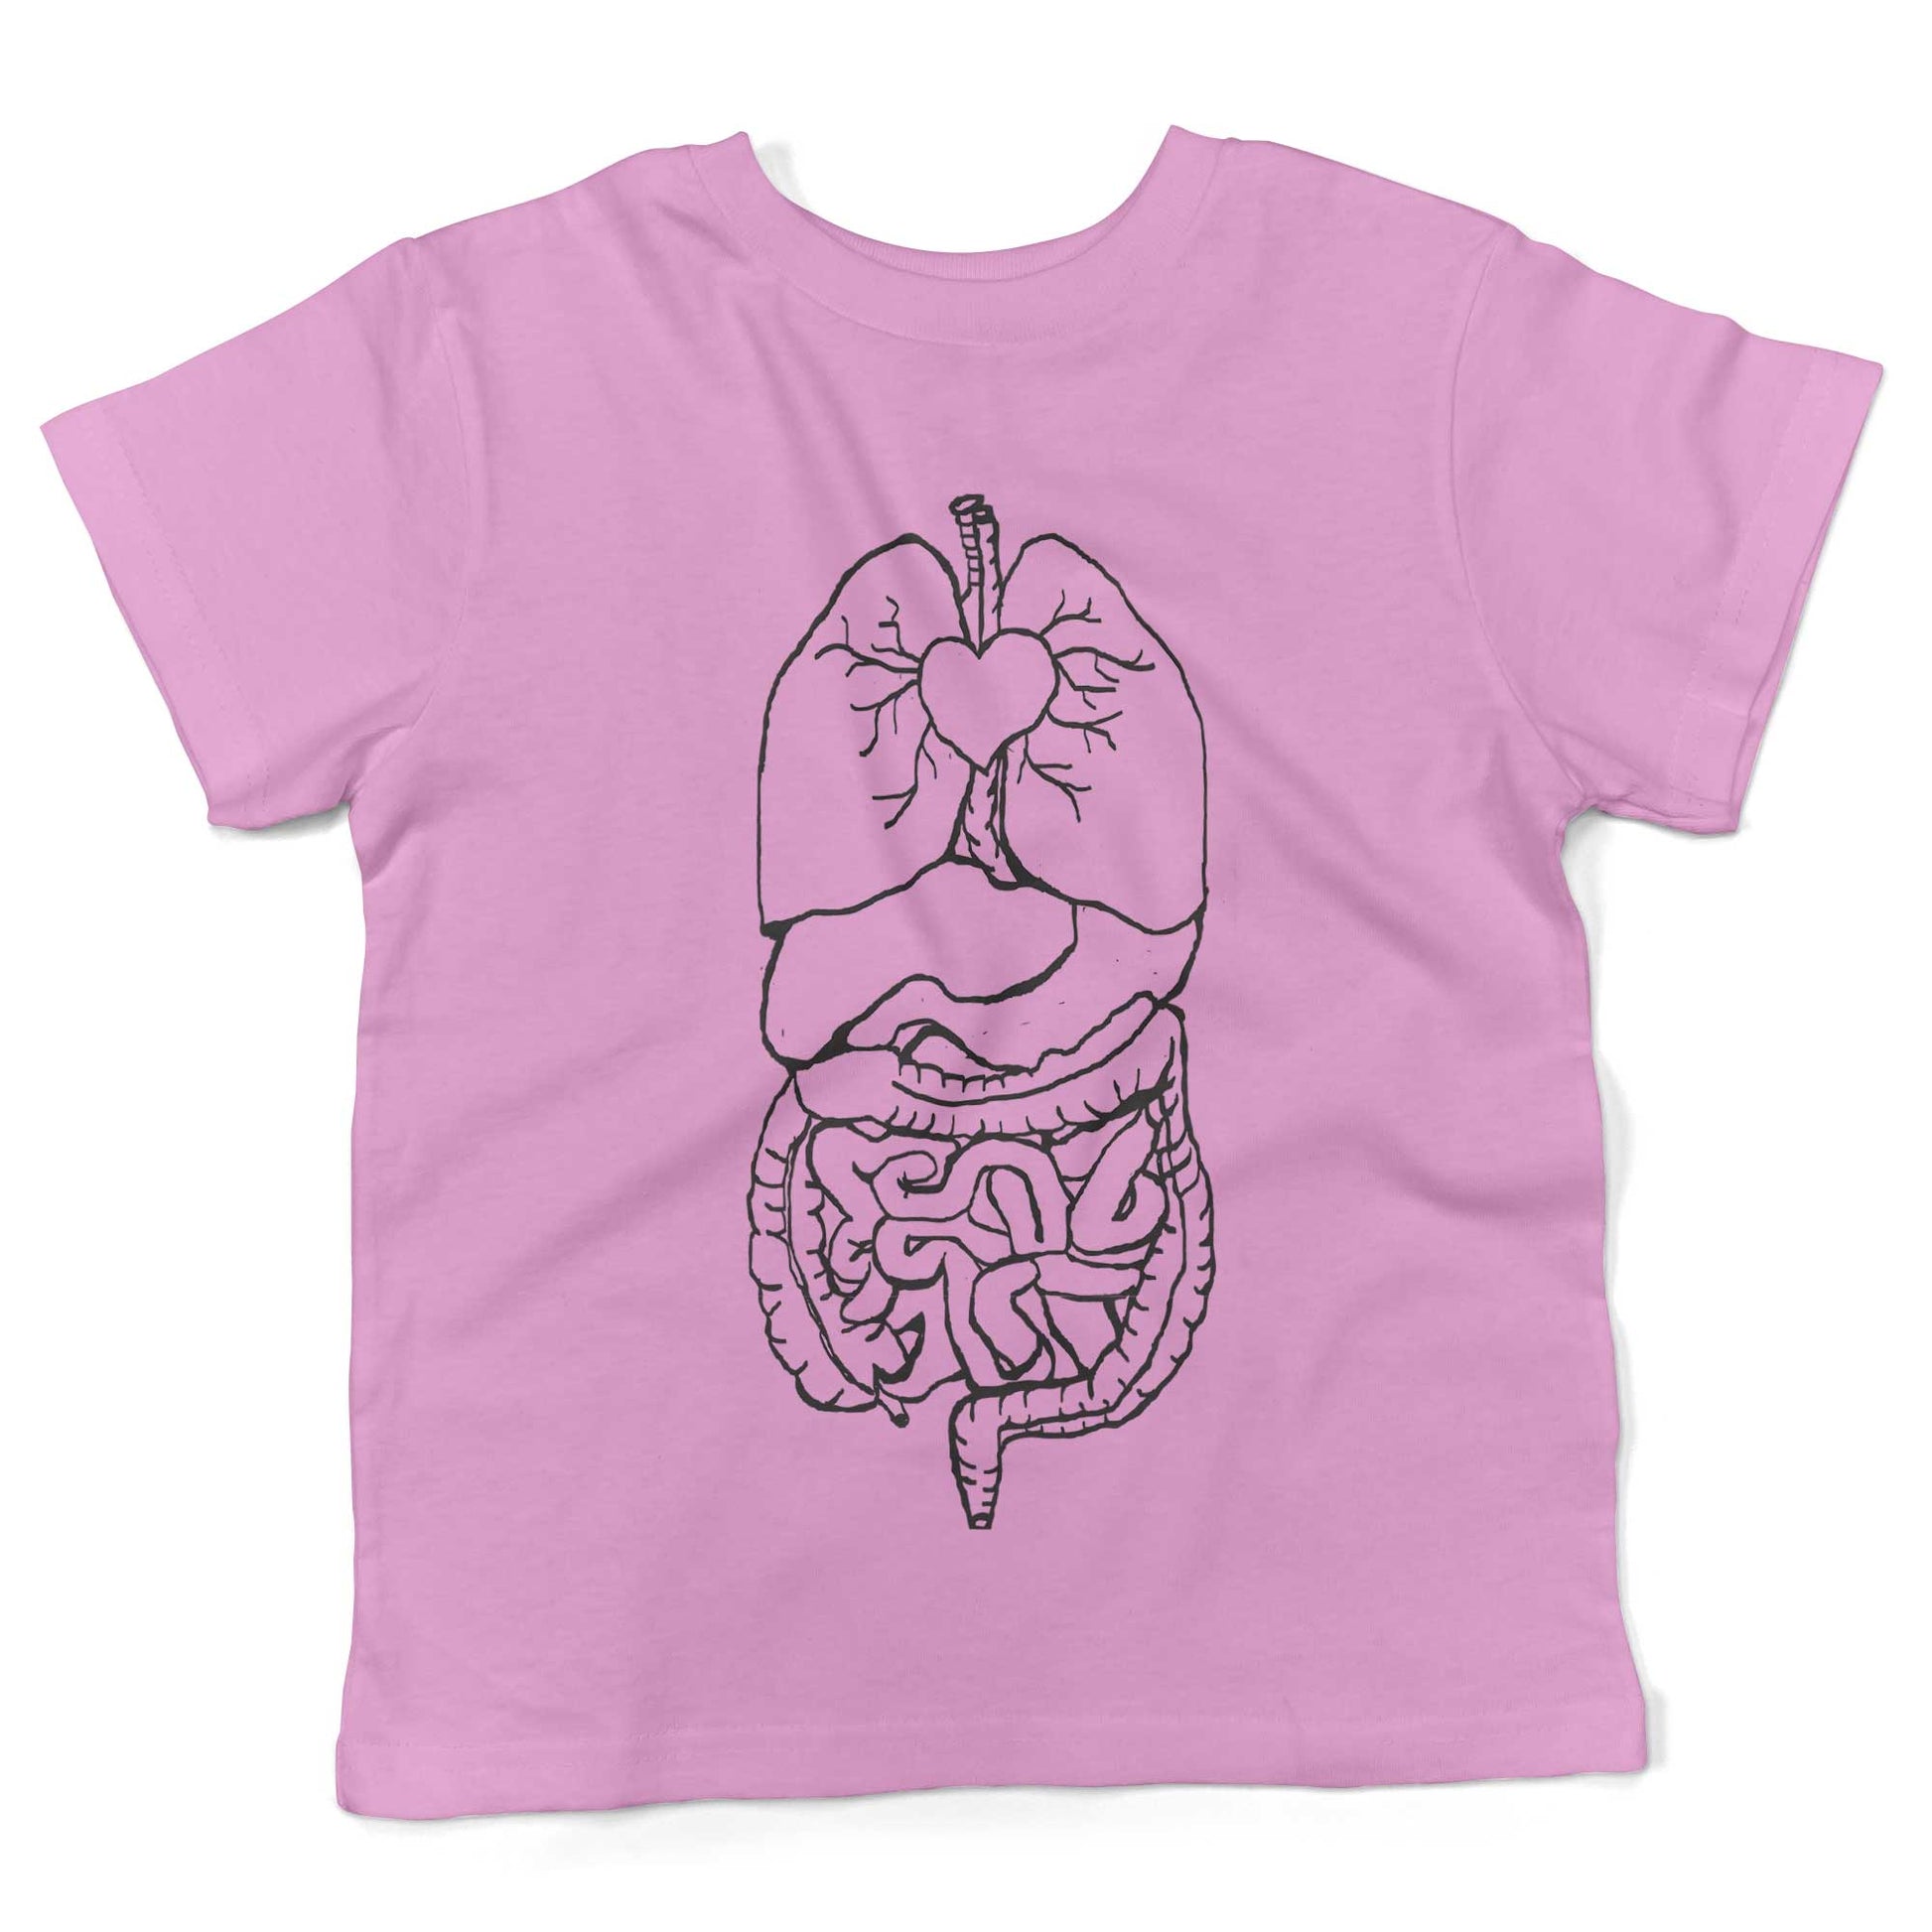 Digestive System Toddler Shirt-Organic Pink-2T